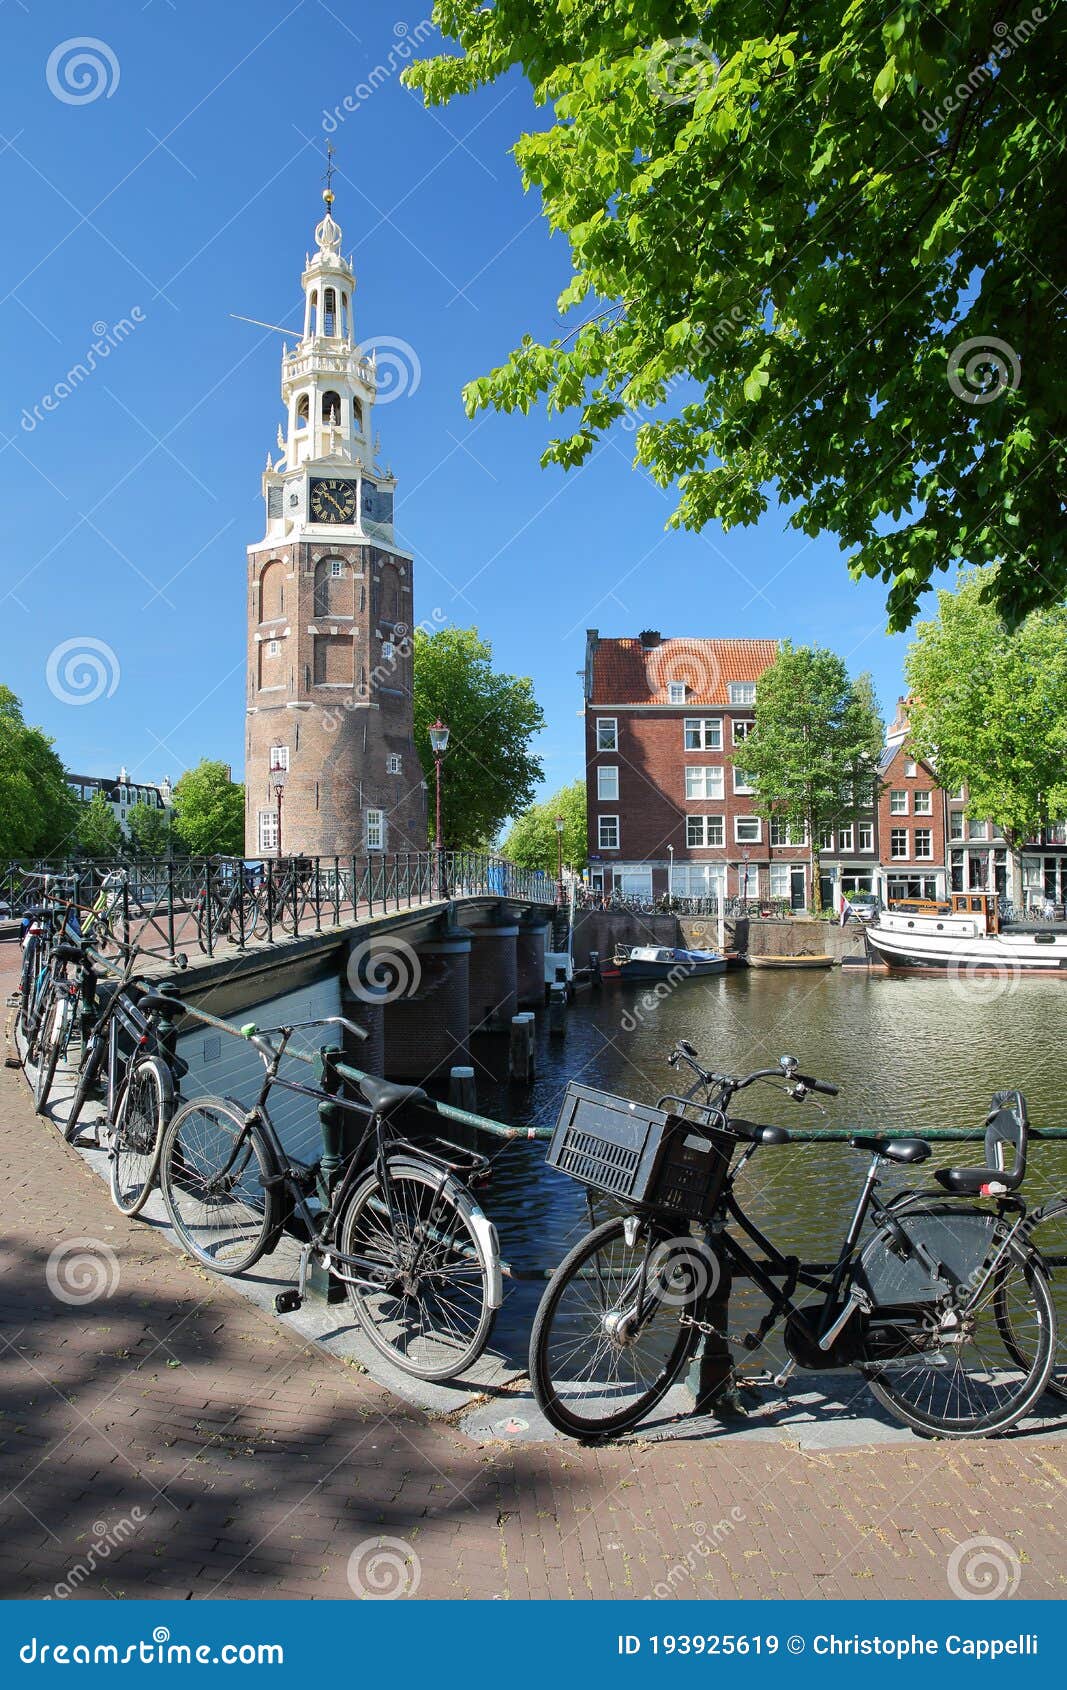 montelbaanstoren tower built in 1516, located along oudeshans canal in amsterdam centrum